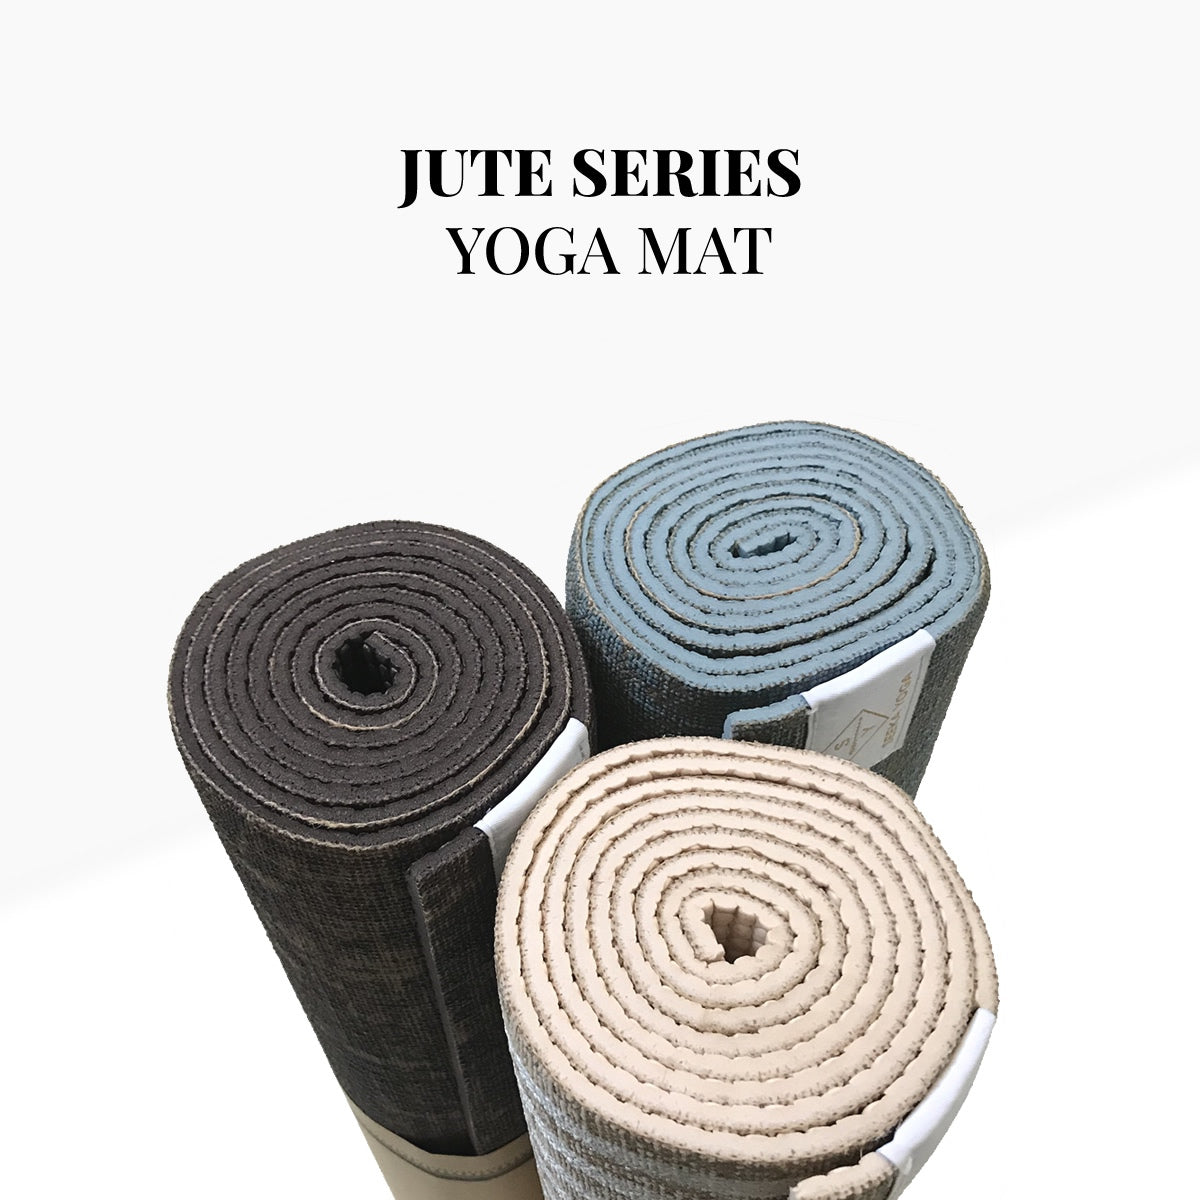  Myga RY1332 - Jute Yoga Mat - High Performance Vegan Floor  Exercise Mat - Eco Friendly Biodegradable Yoga Mat with PVC Backing - 5mm  Thickness - Aqua : Sports & Outdoors